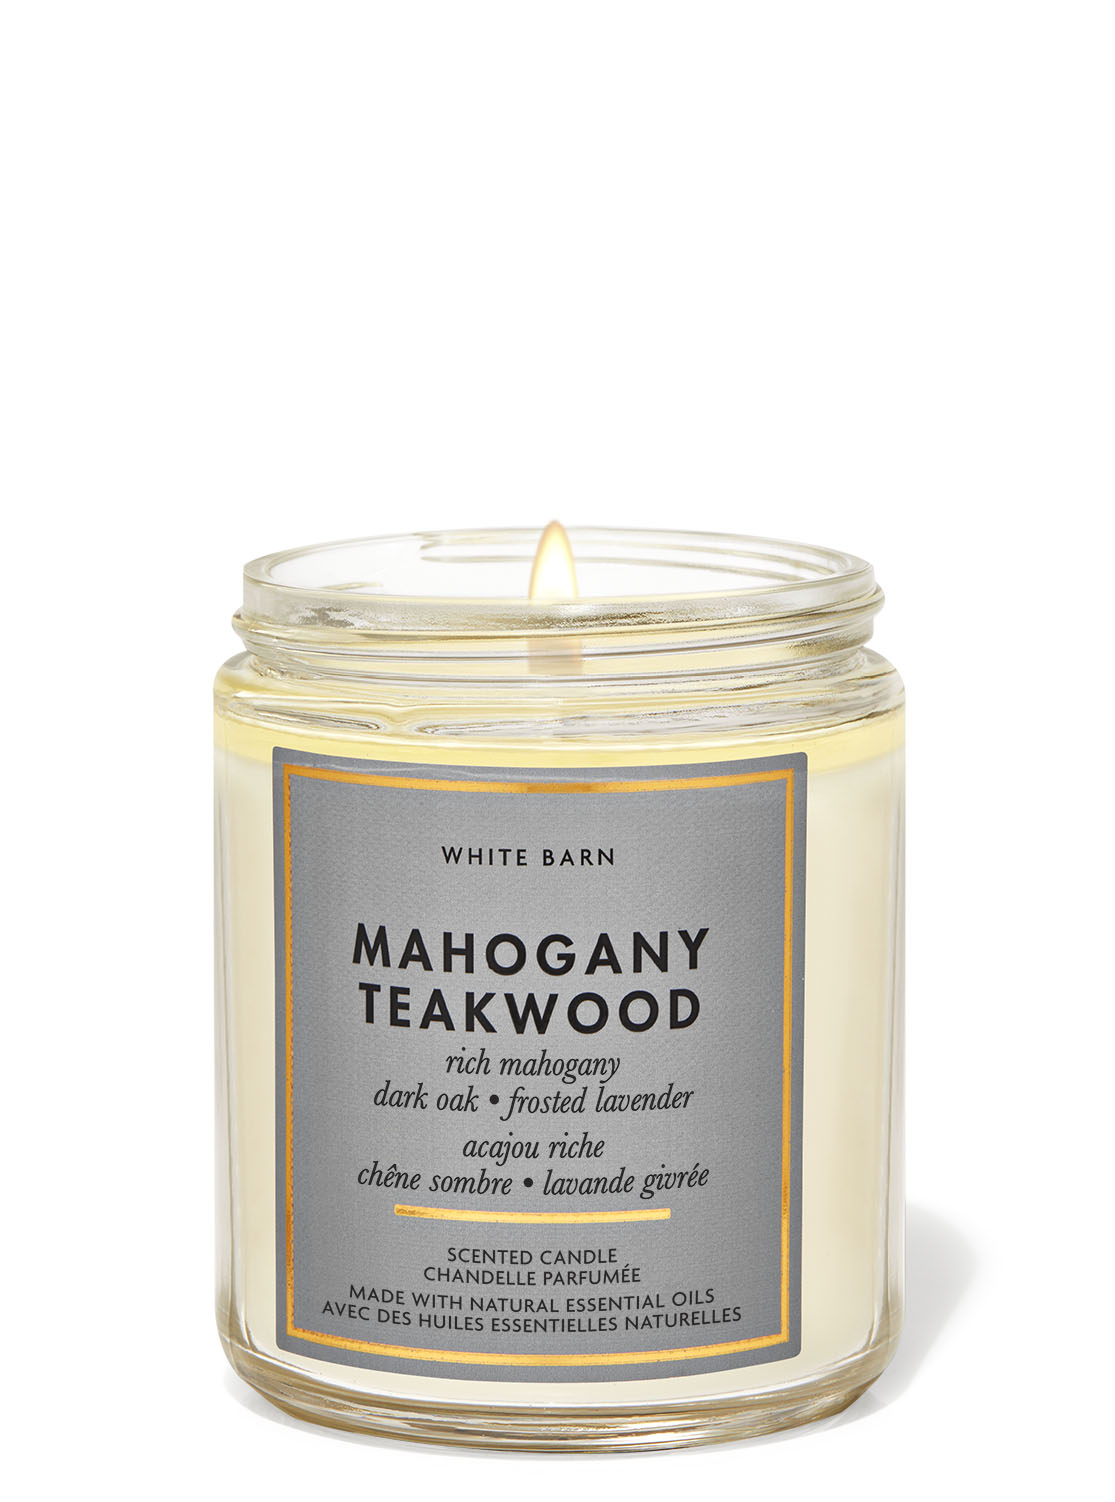 Bath & Body Works Mahogany Teakwood Single Wick Candle - 7 oz